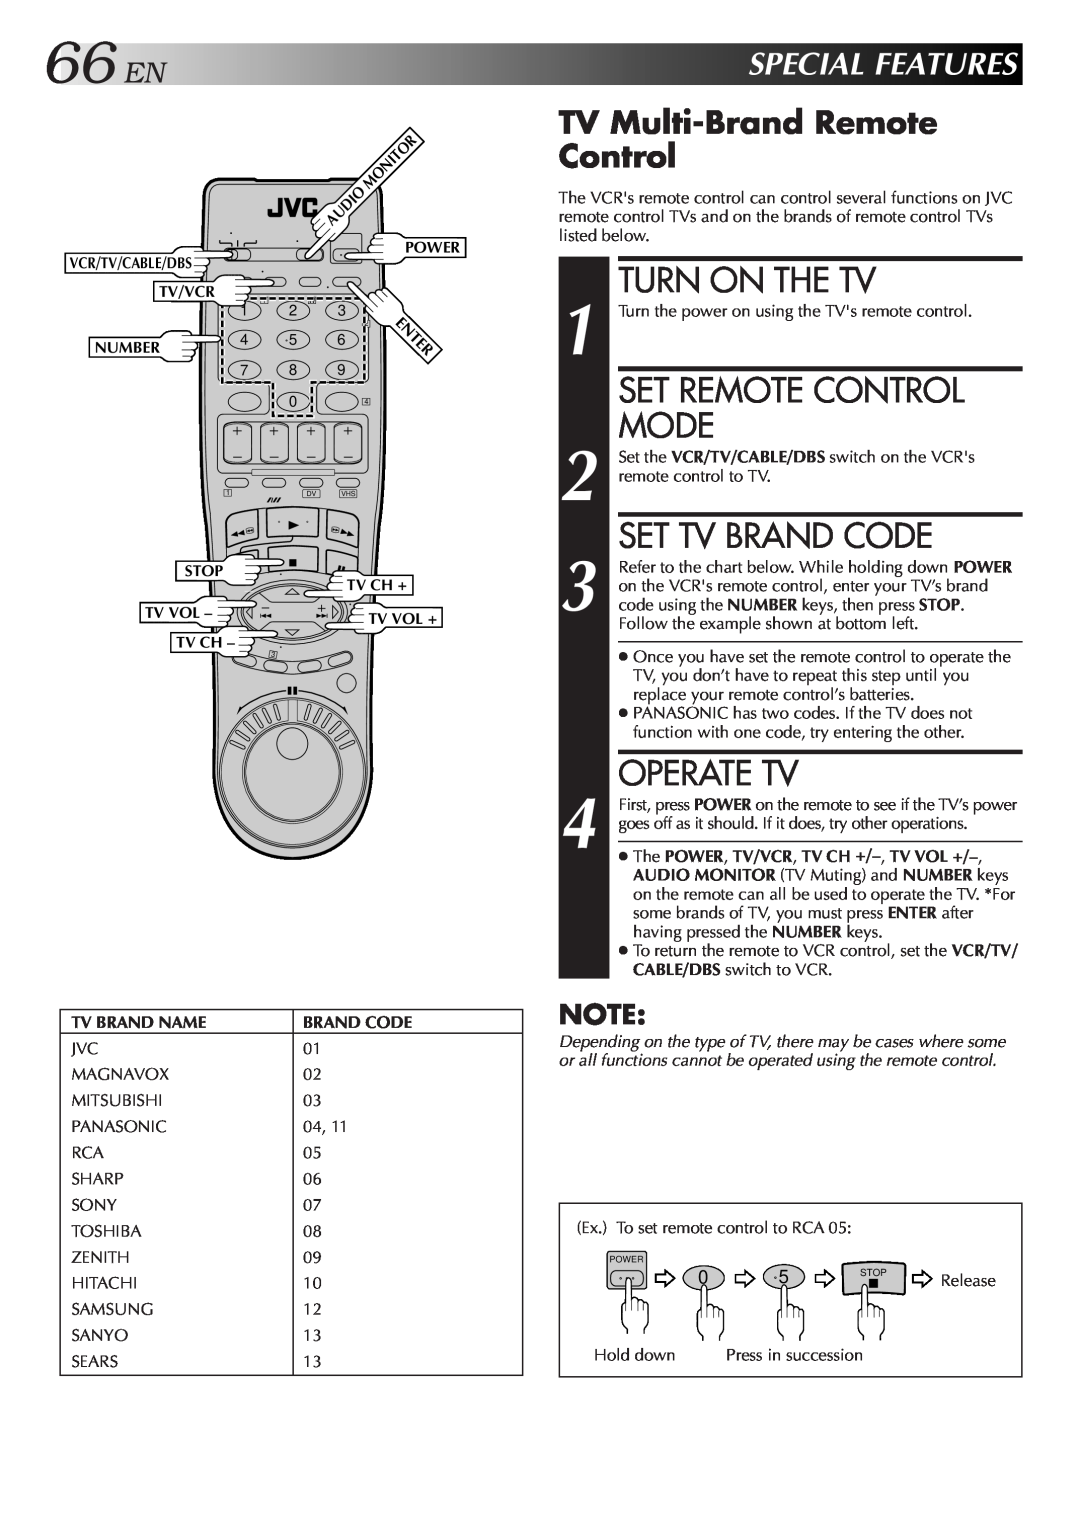 JVC SR-VS10U manual 66EN, Turn On The Tv, Set Remote Control Mode, Set Tv Brand Code, Operate Tv, Specialfeatures 